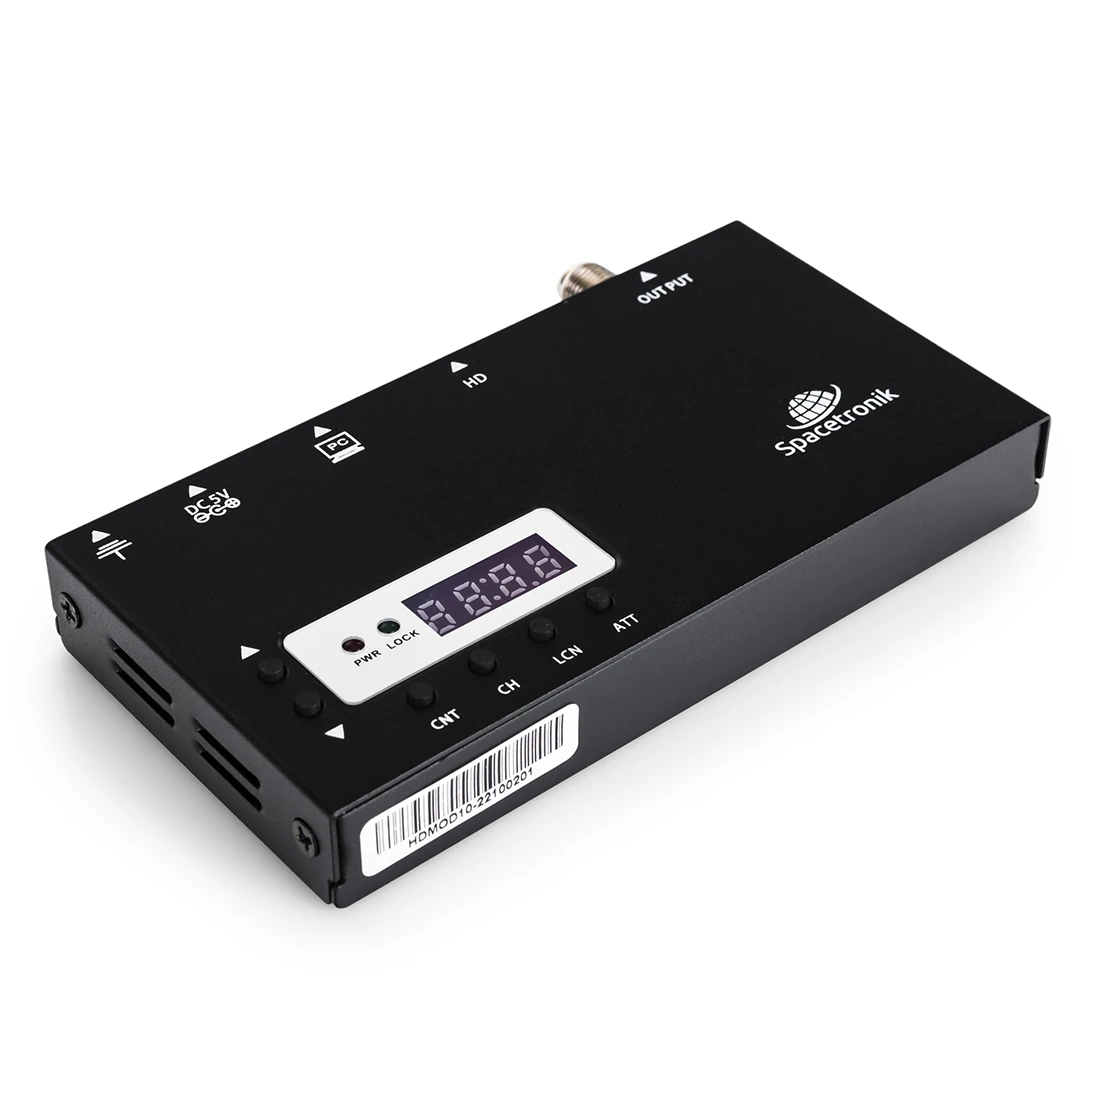 HDMI-Modulator für DVB-T MPEG4 Spacetronik HDMOD10 Micro